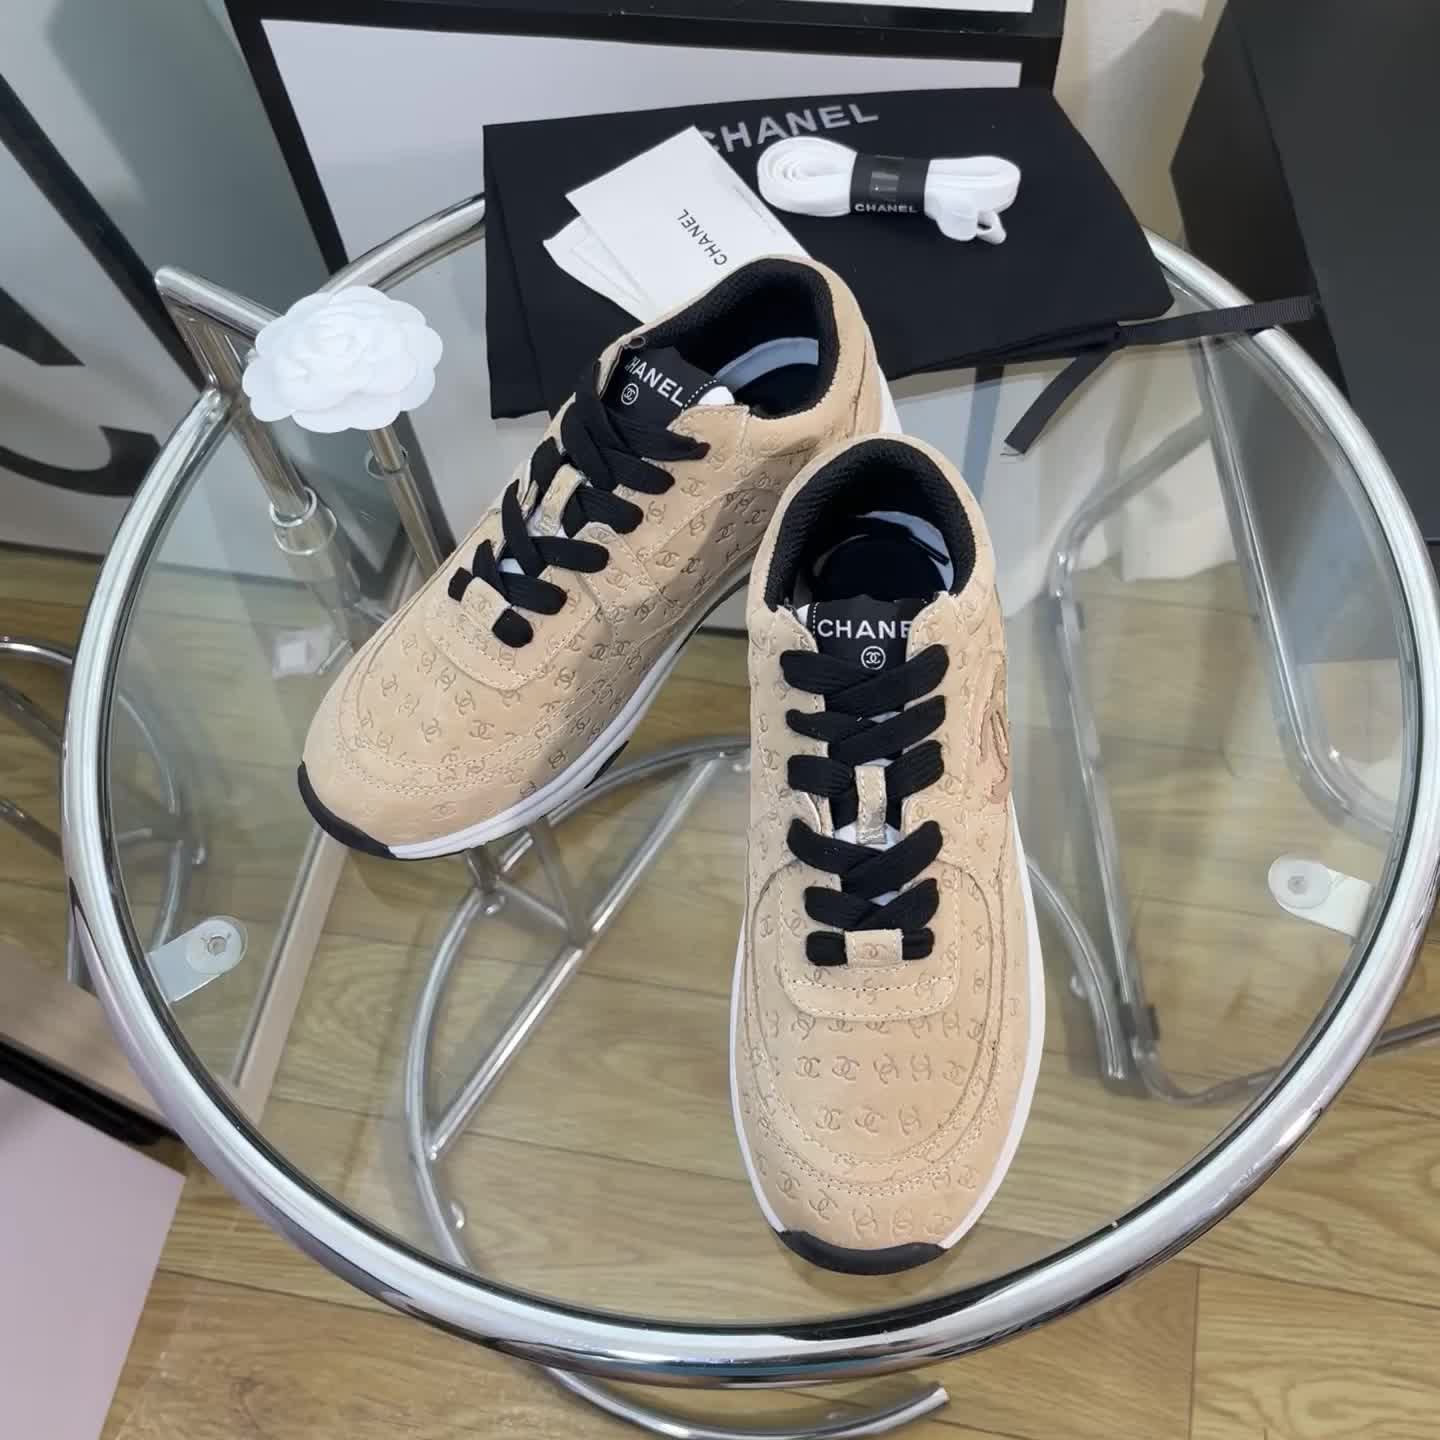 Men shoes-Chanel Code: XS5123